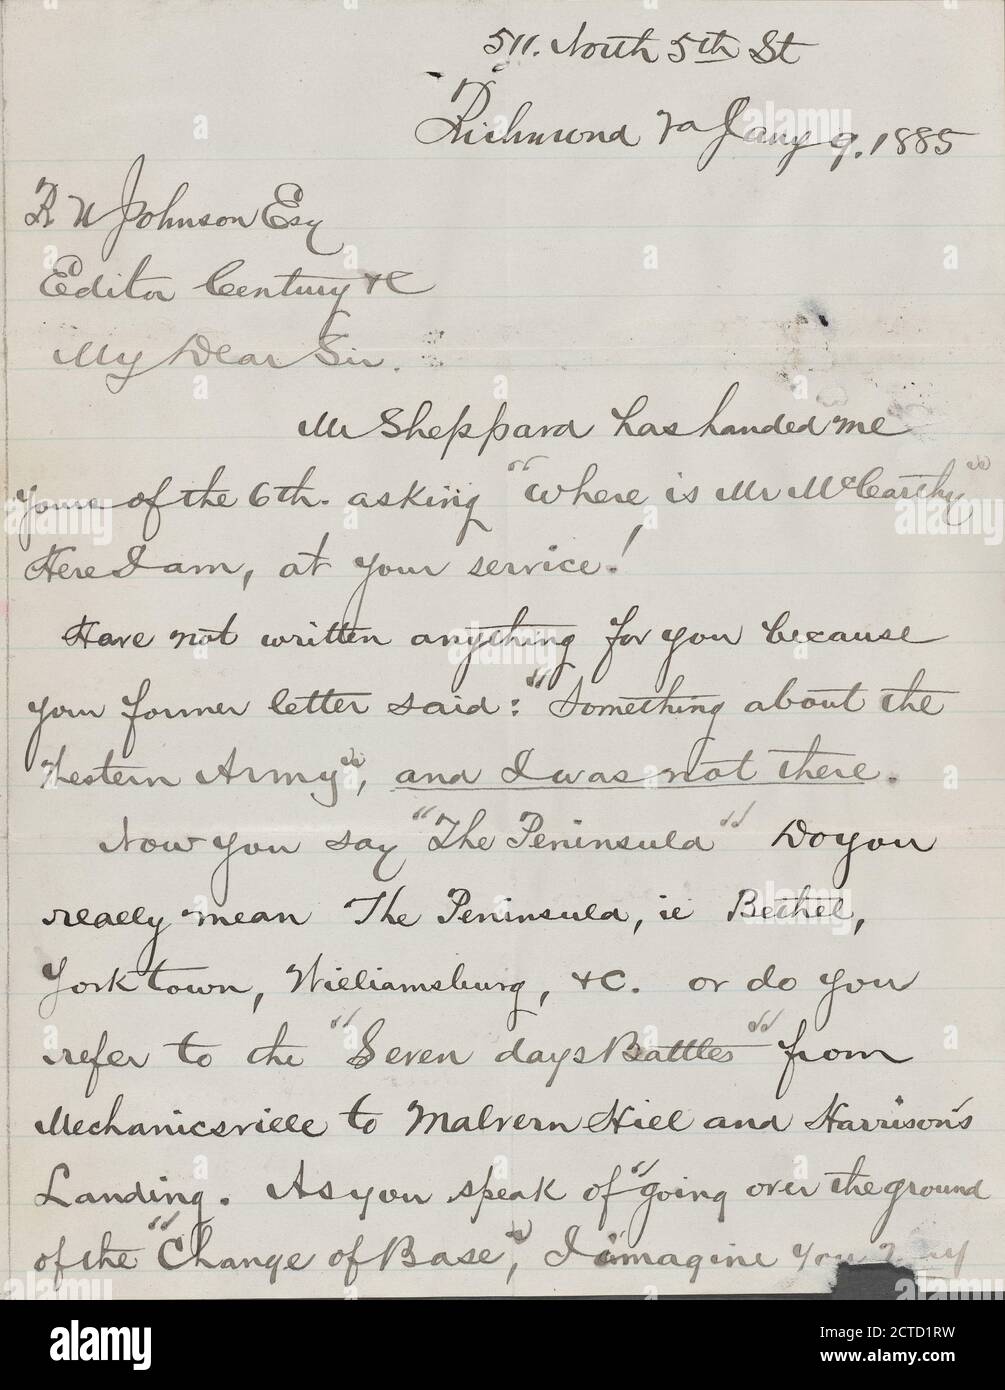 McCarthy, Carlton, text, Correspondence, 1885 Stock Photo